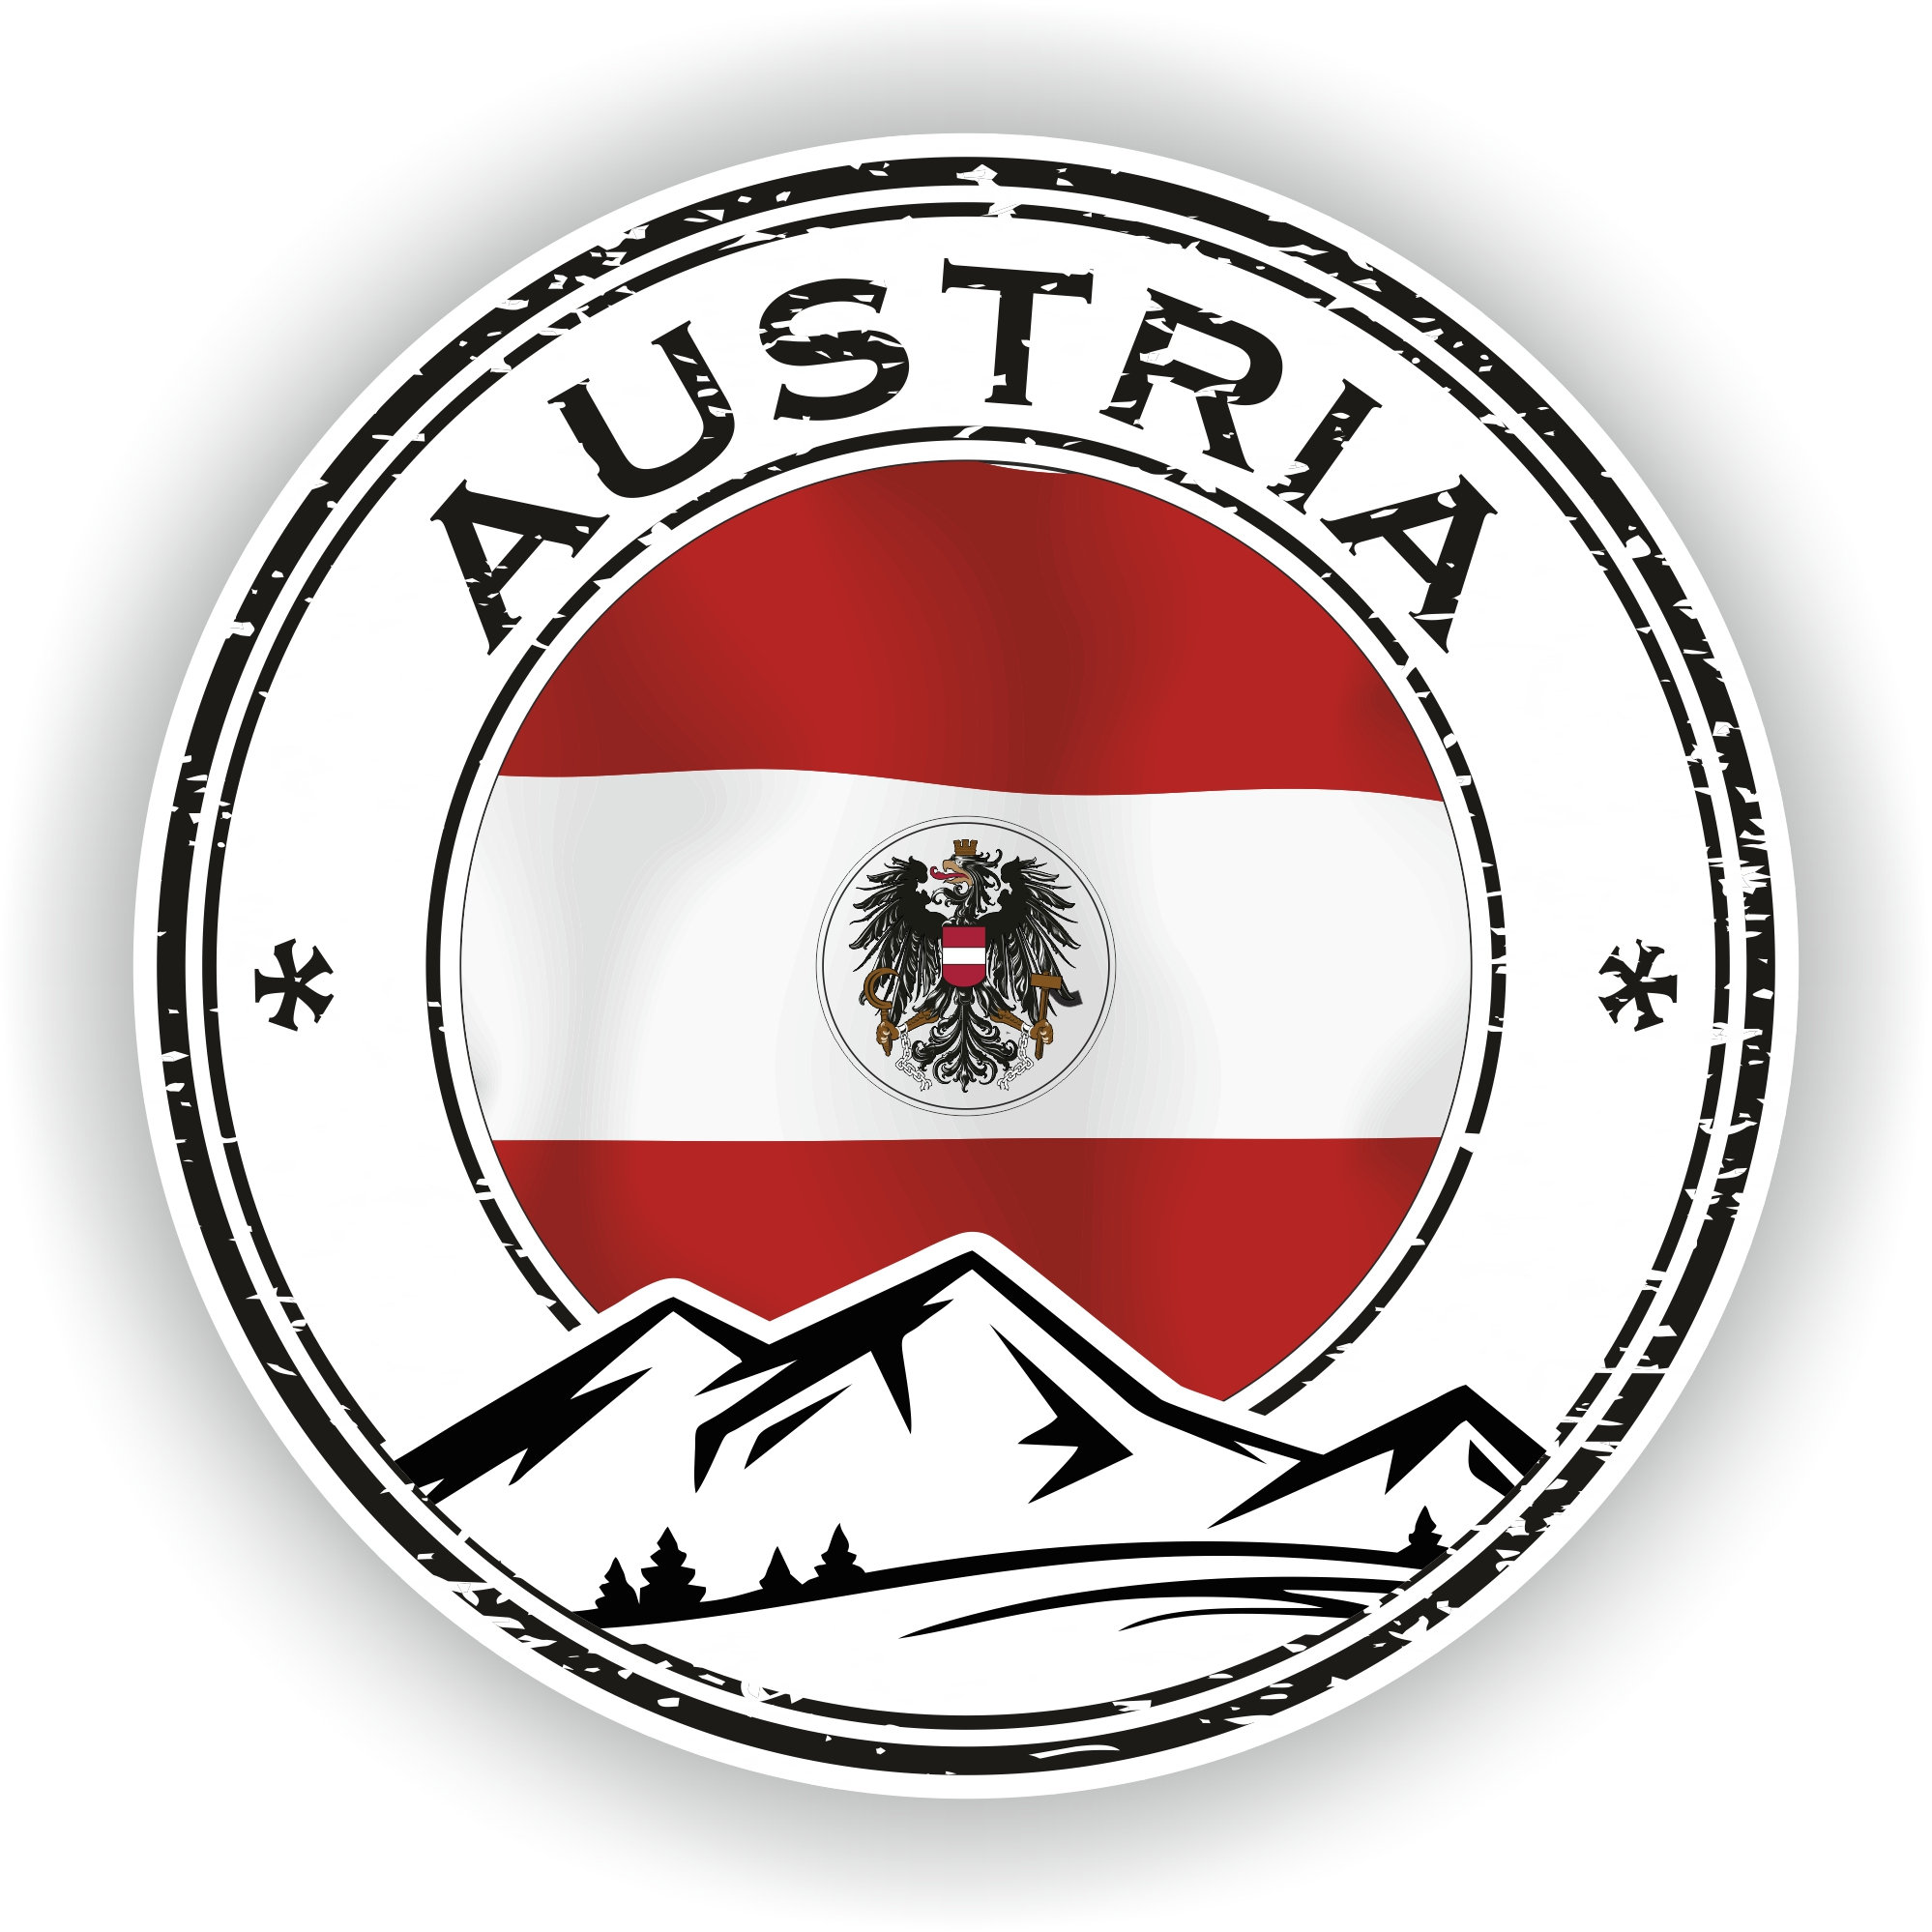 Austria Seal Sticker Round Flag for Laptop Book Fridge Guitar